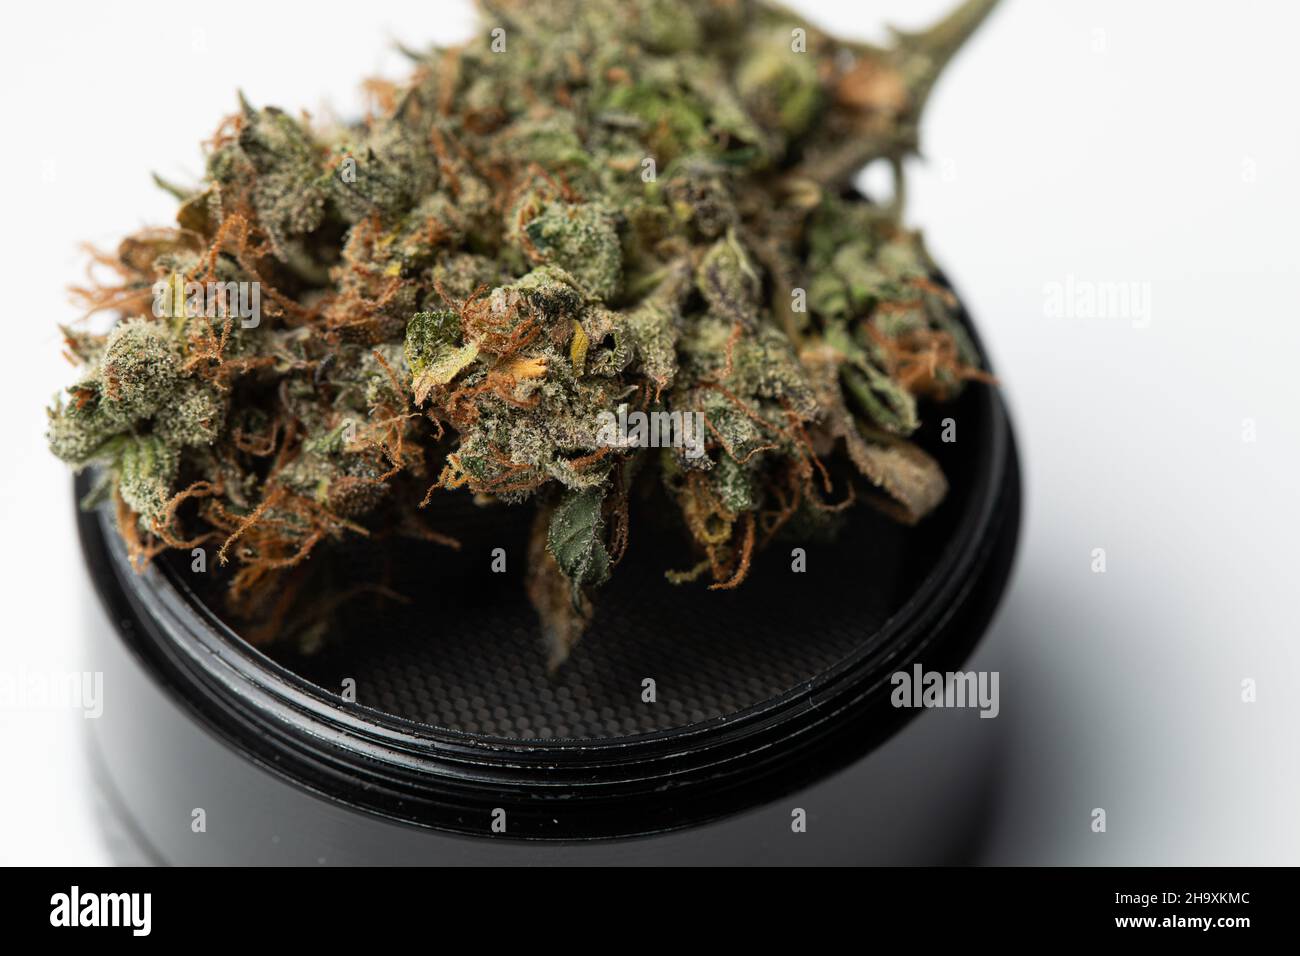 Metallic black grinder with buds of marijuana, weed cannabis, medical marijuana Stock Photo